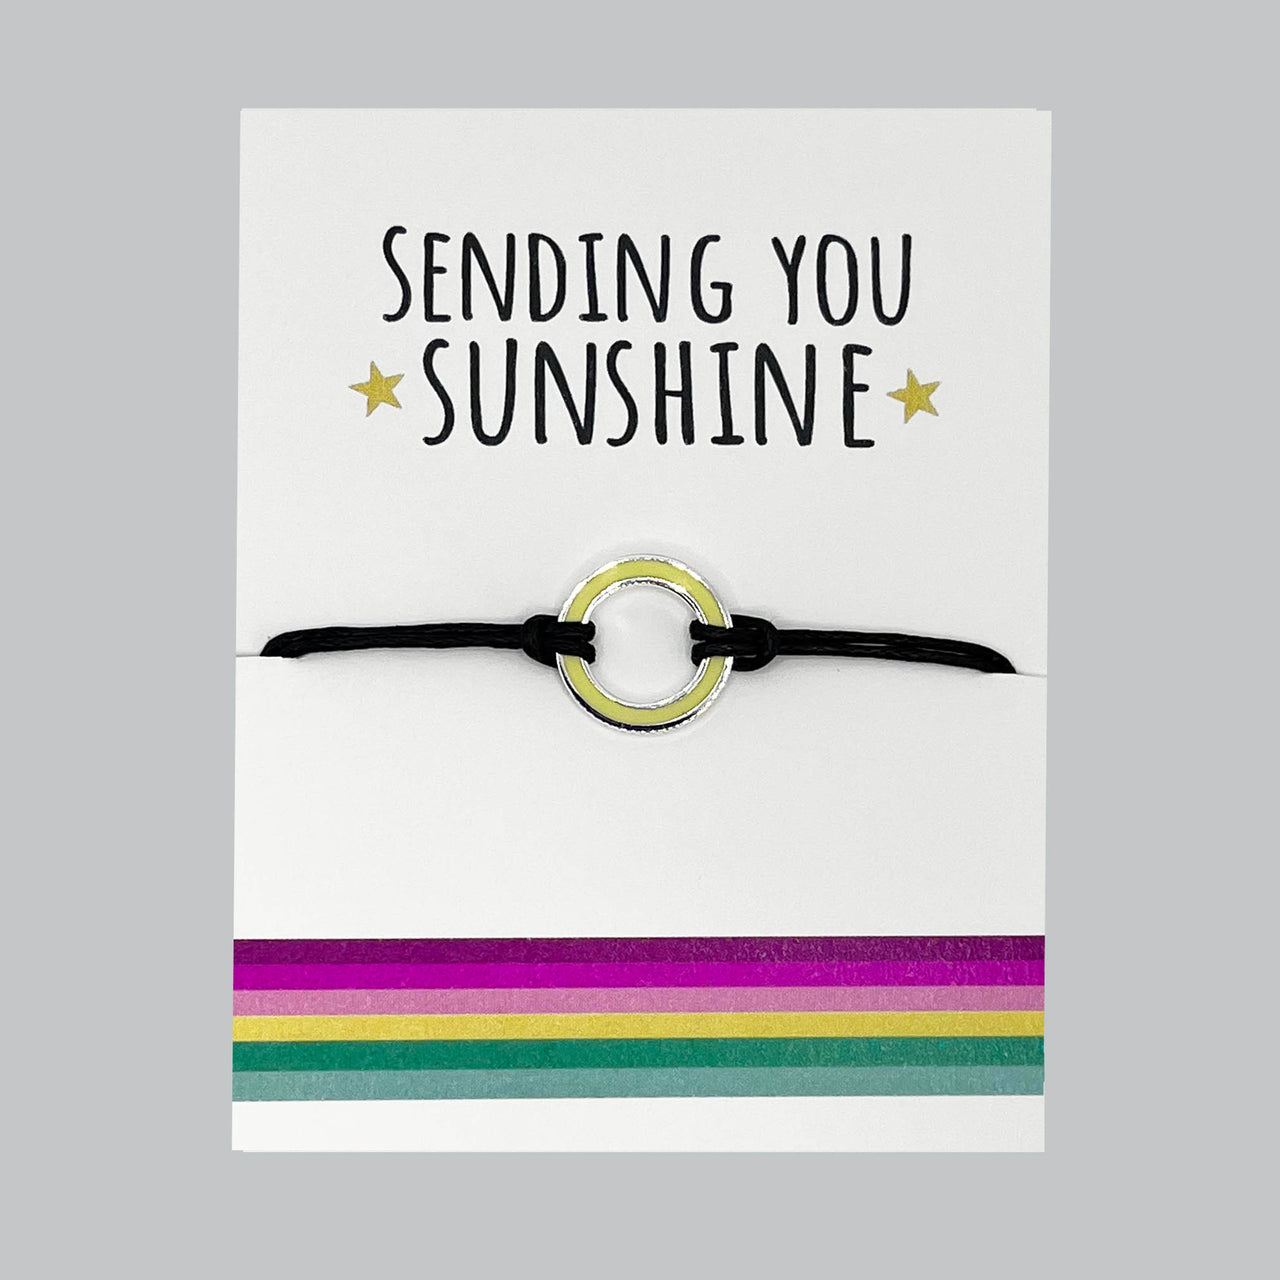 Sending you sunshine